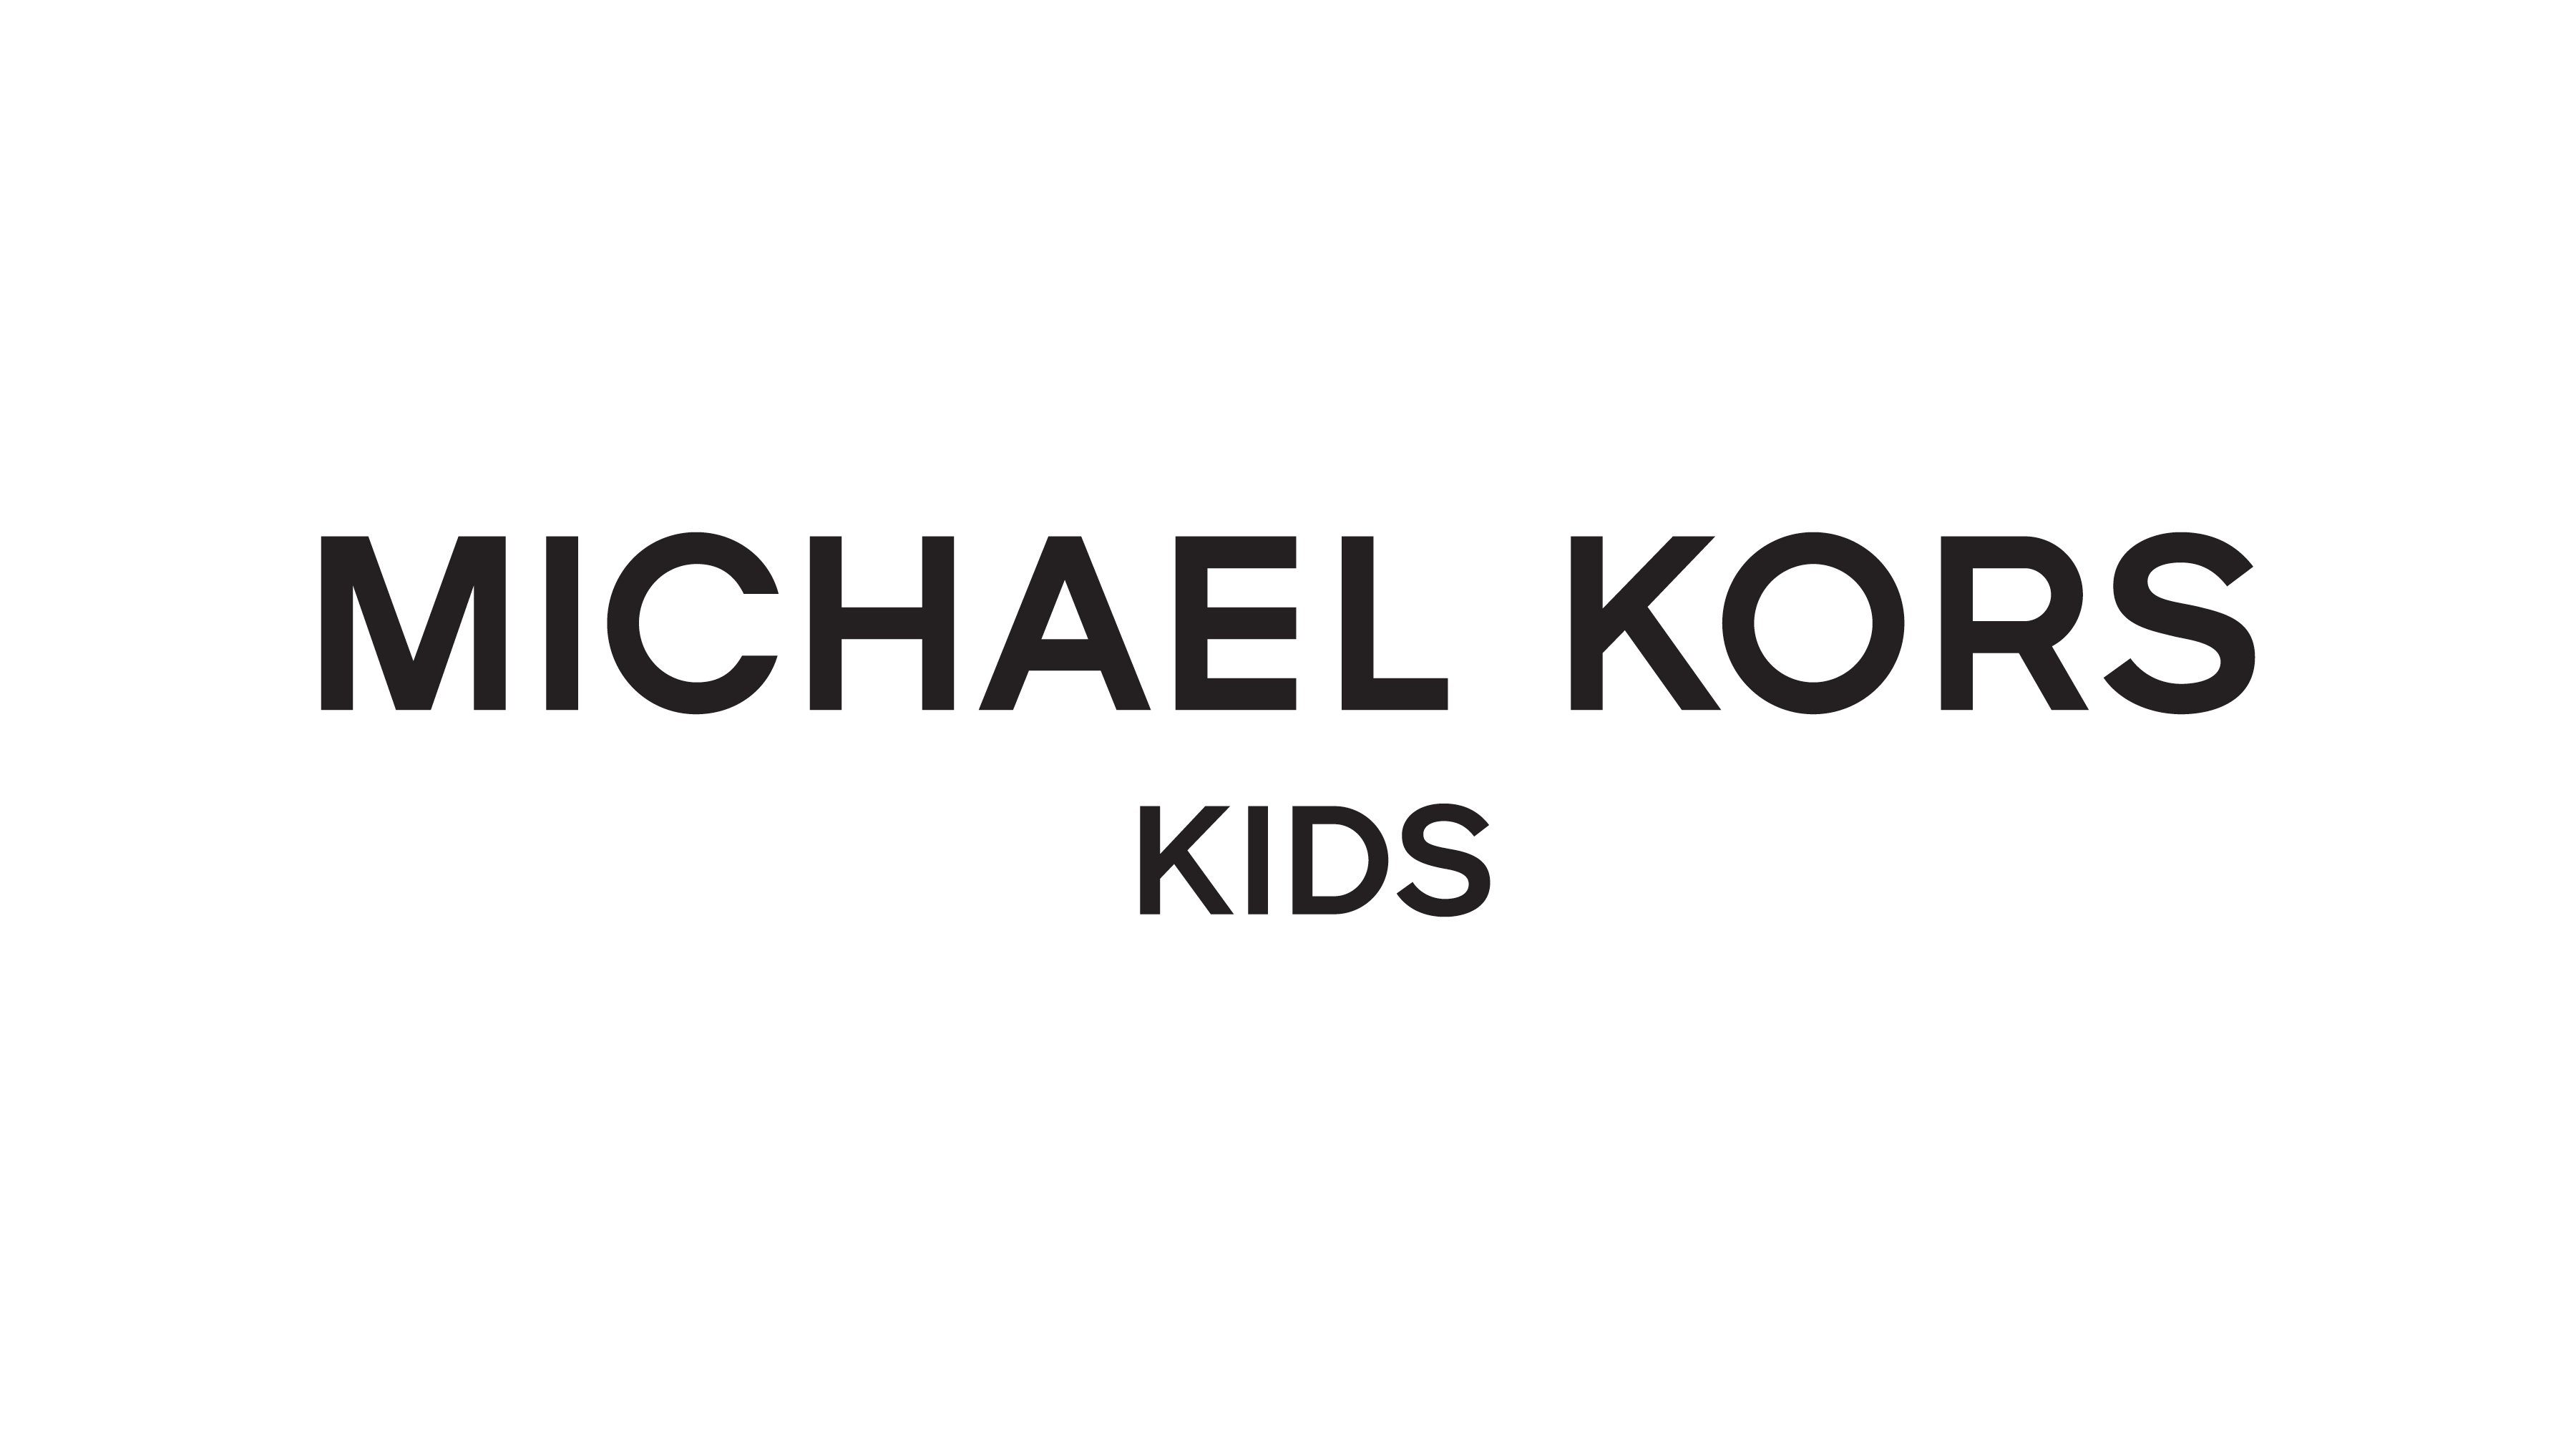 MICHAEL KORS KIDS